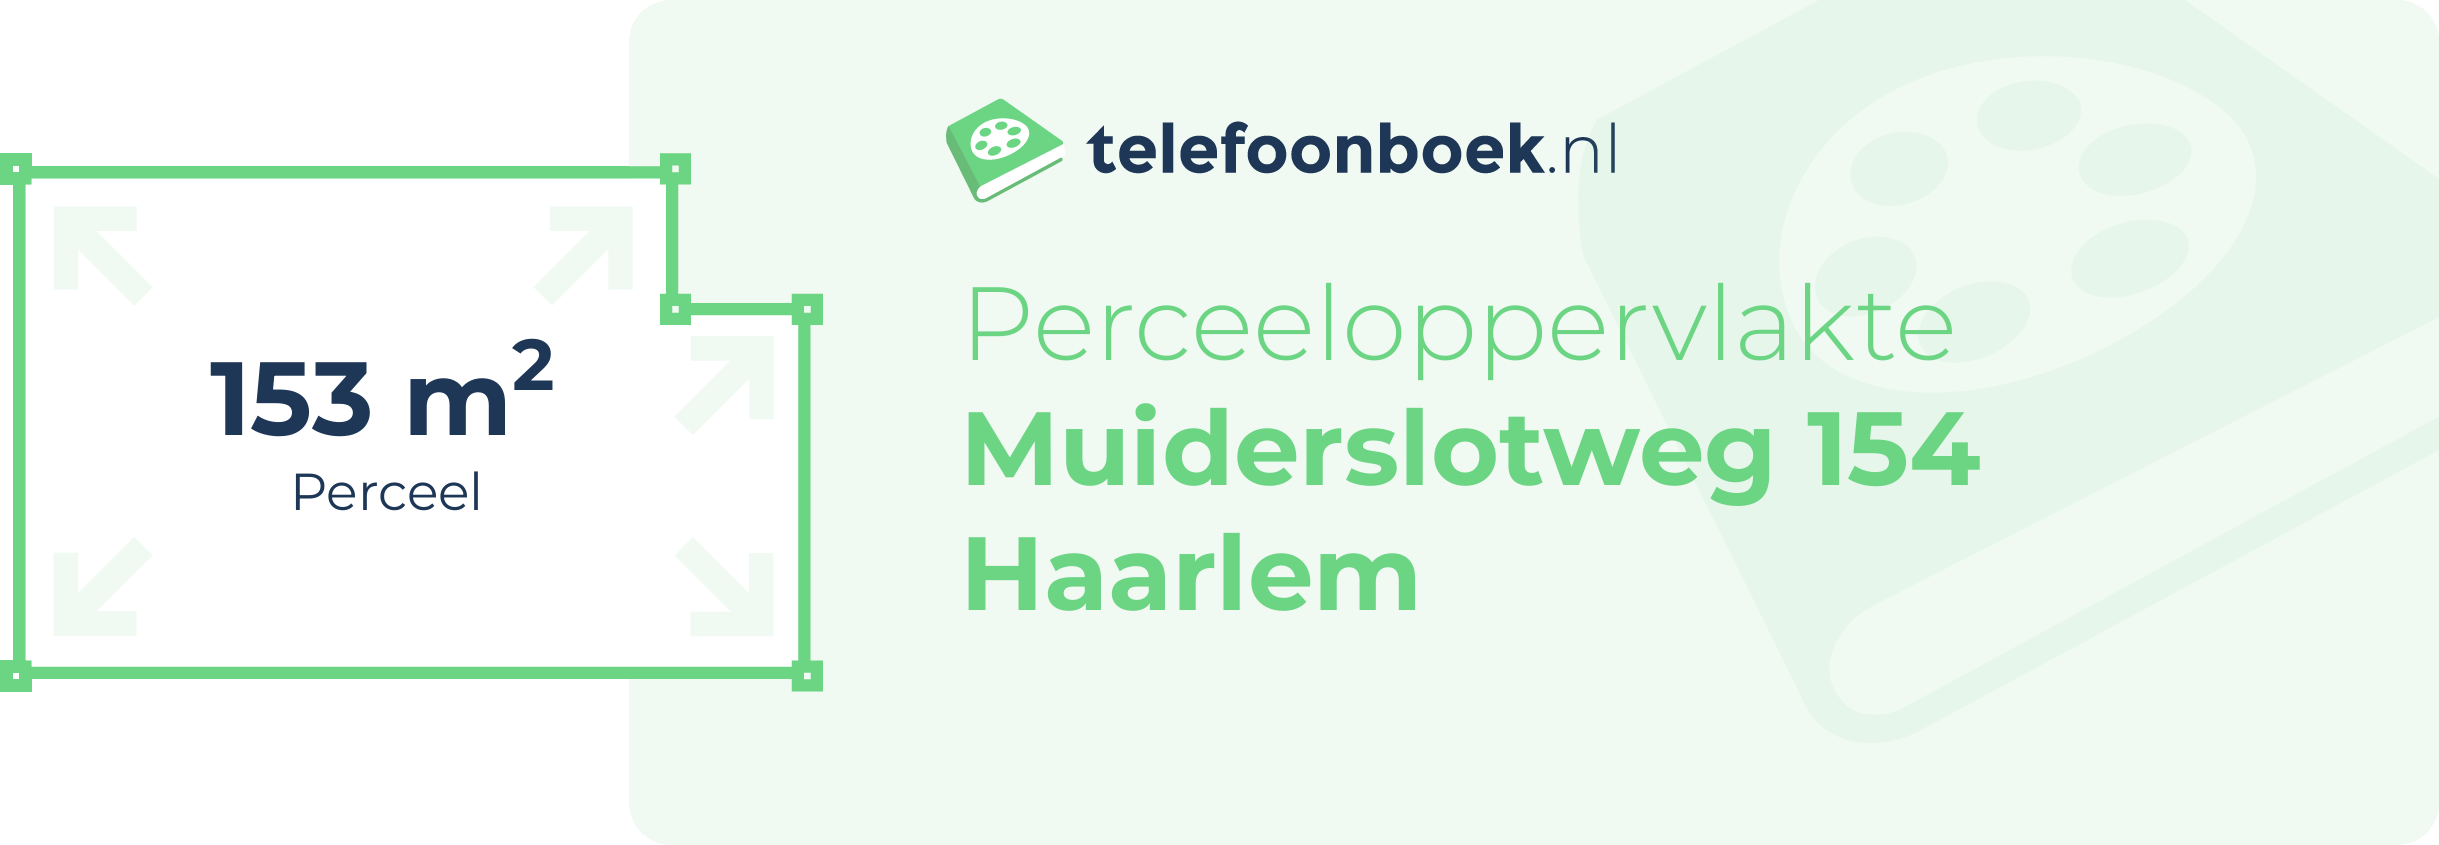 Perceeloppervlakte Muiderslotweg 154 Haarlem